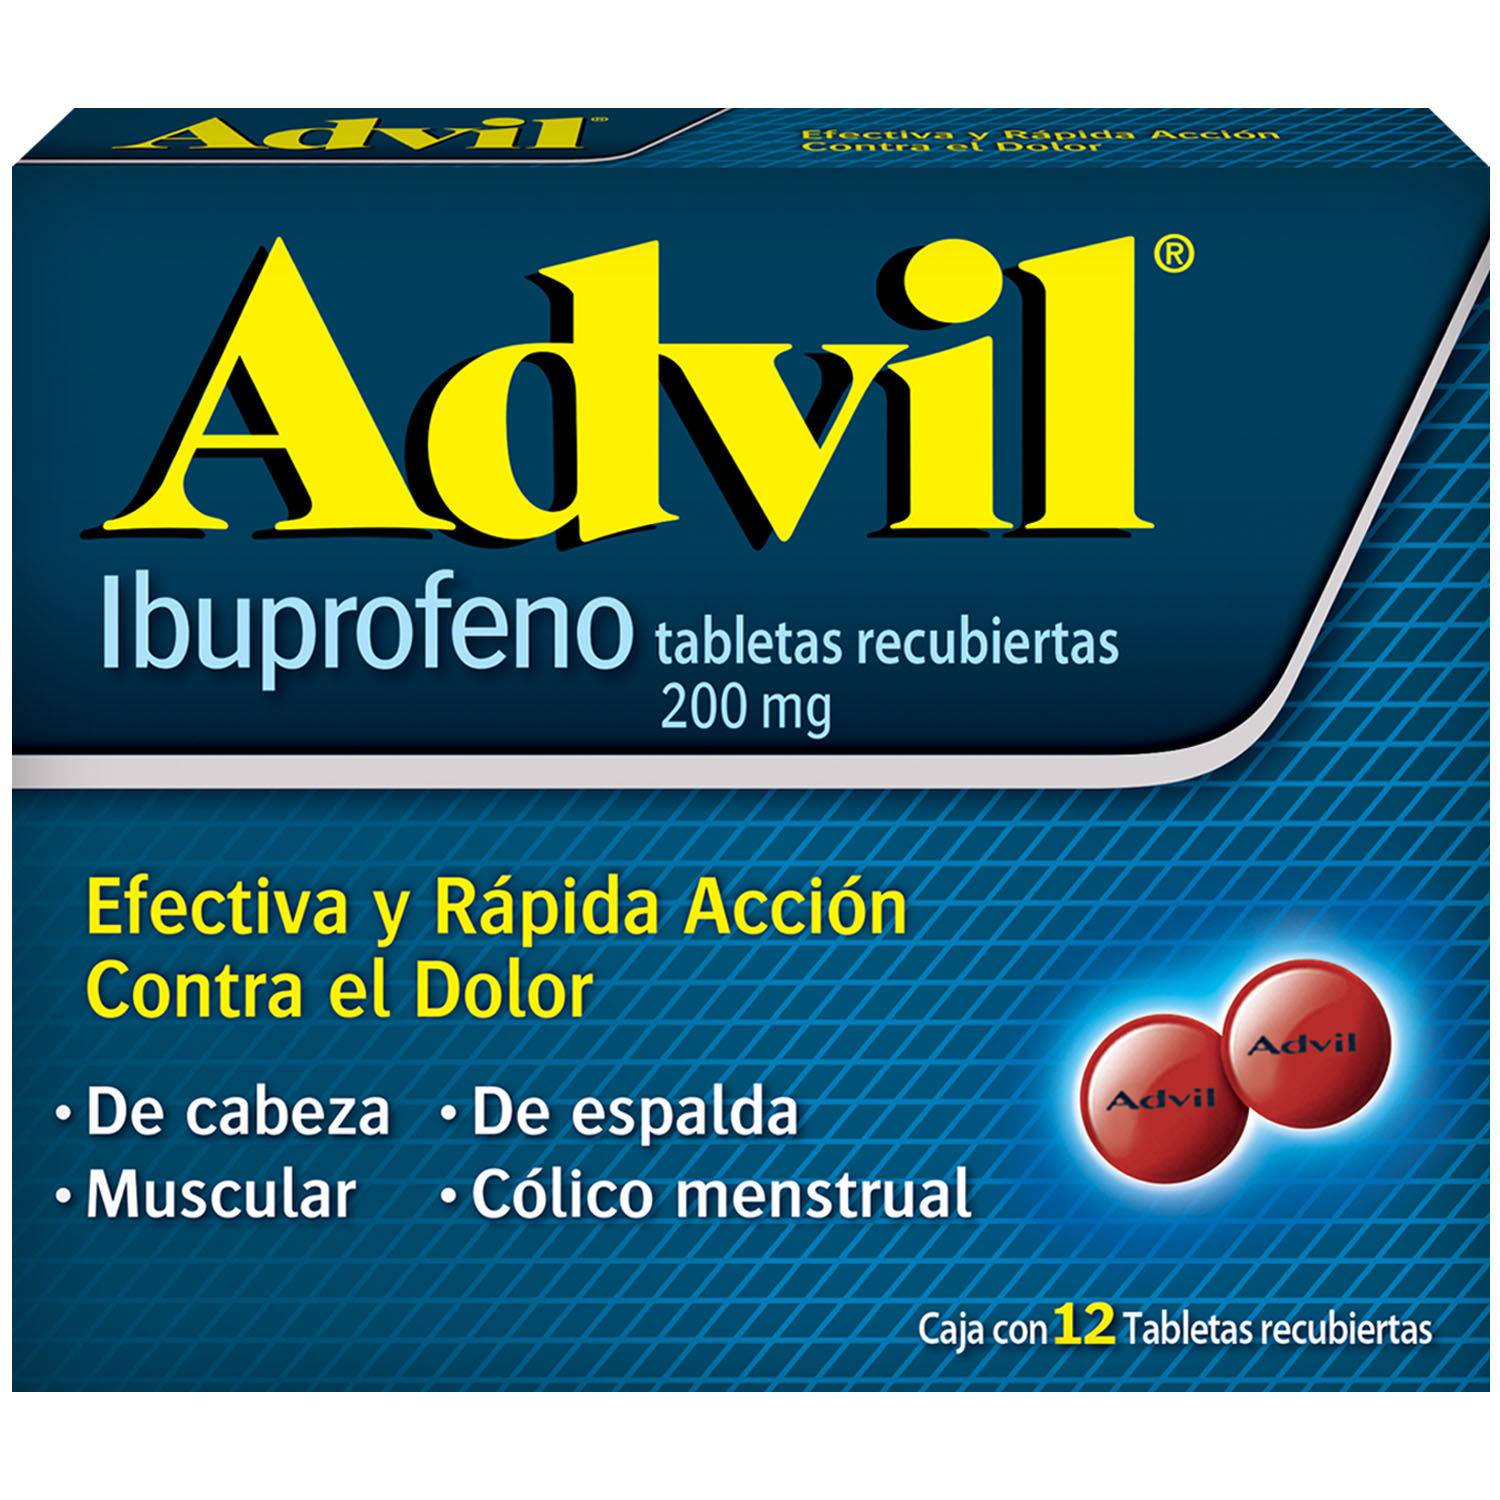 Analgesico Capsula Adulto Advil